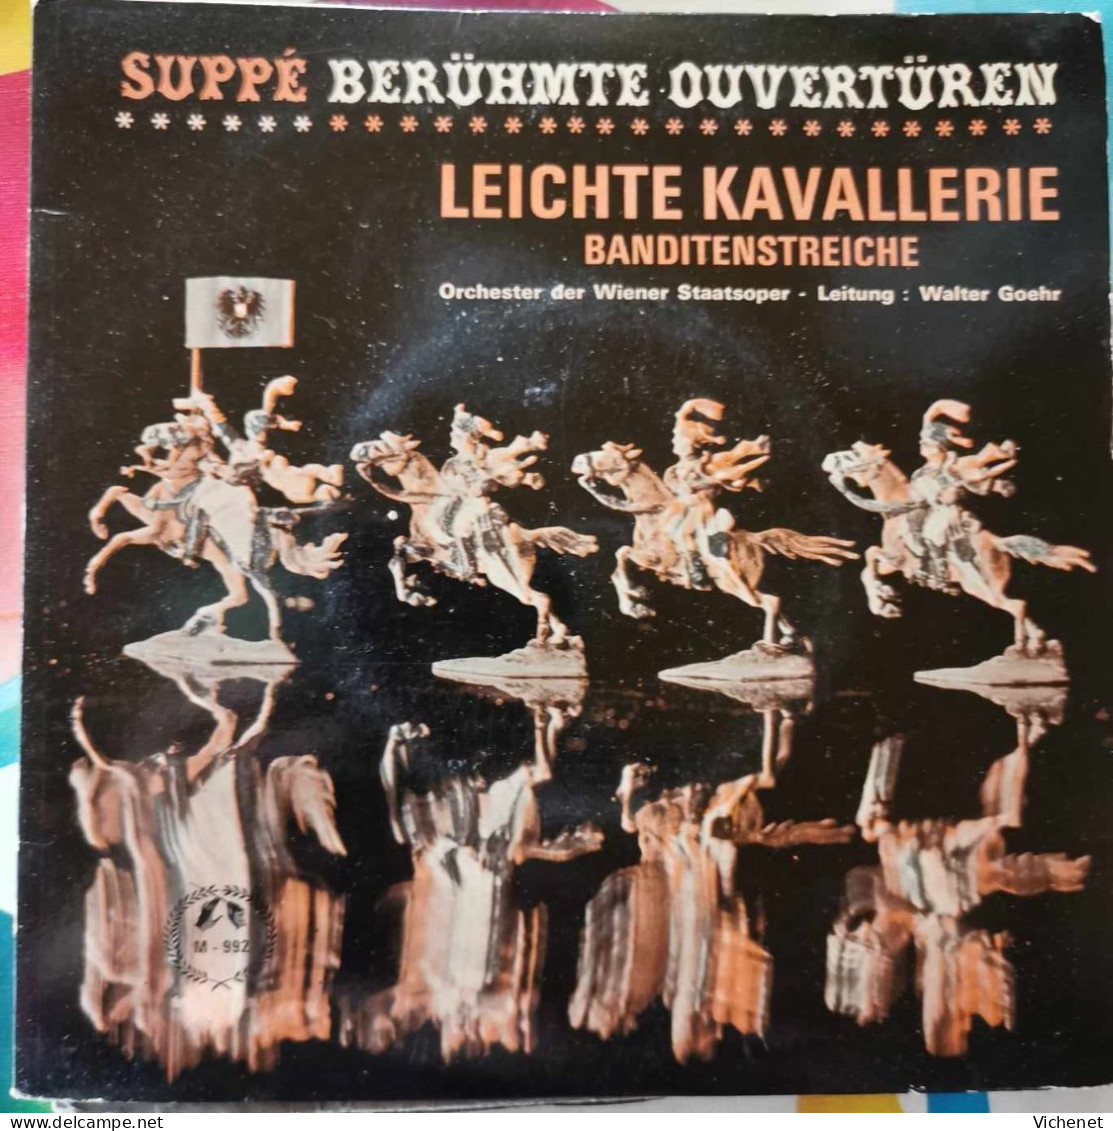 Suppé – Berühmte Ouvertüren - Leichte Kavallerie / Banditenstreiche -  45T - Classical